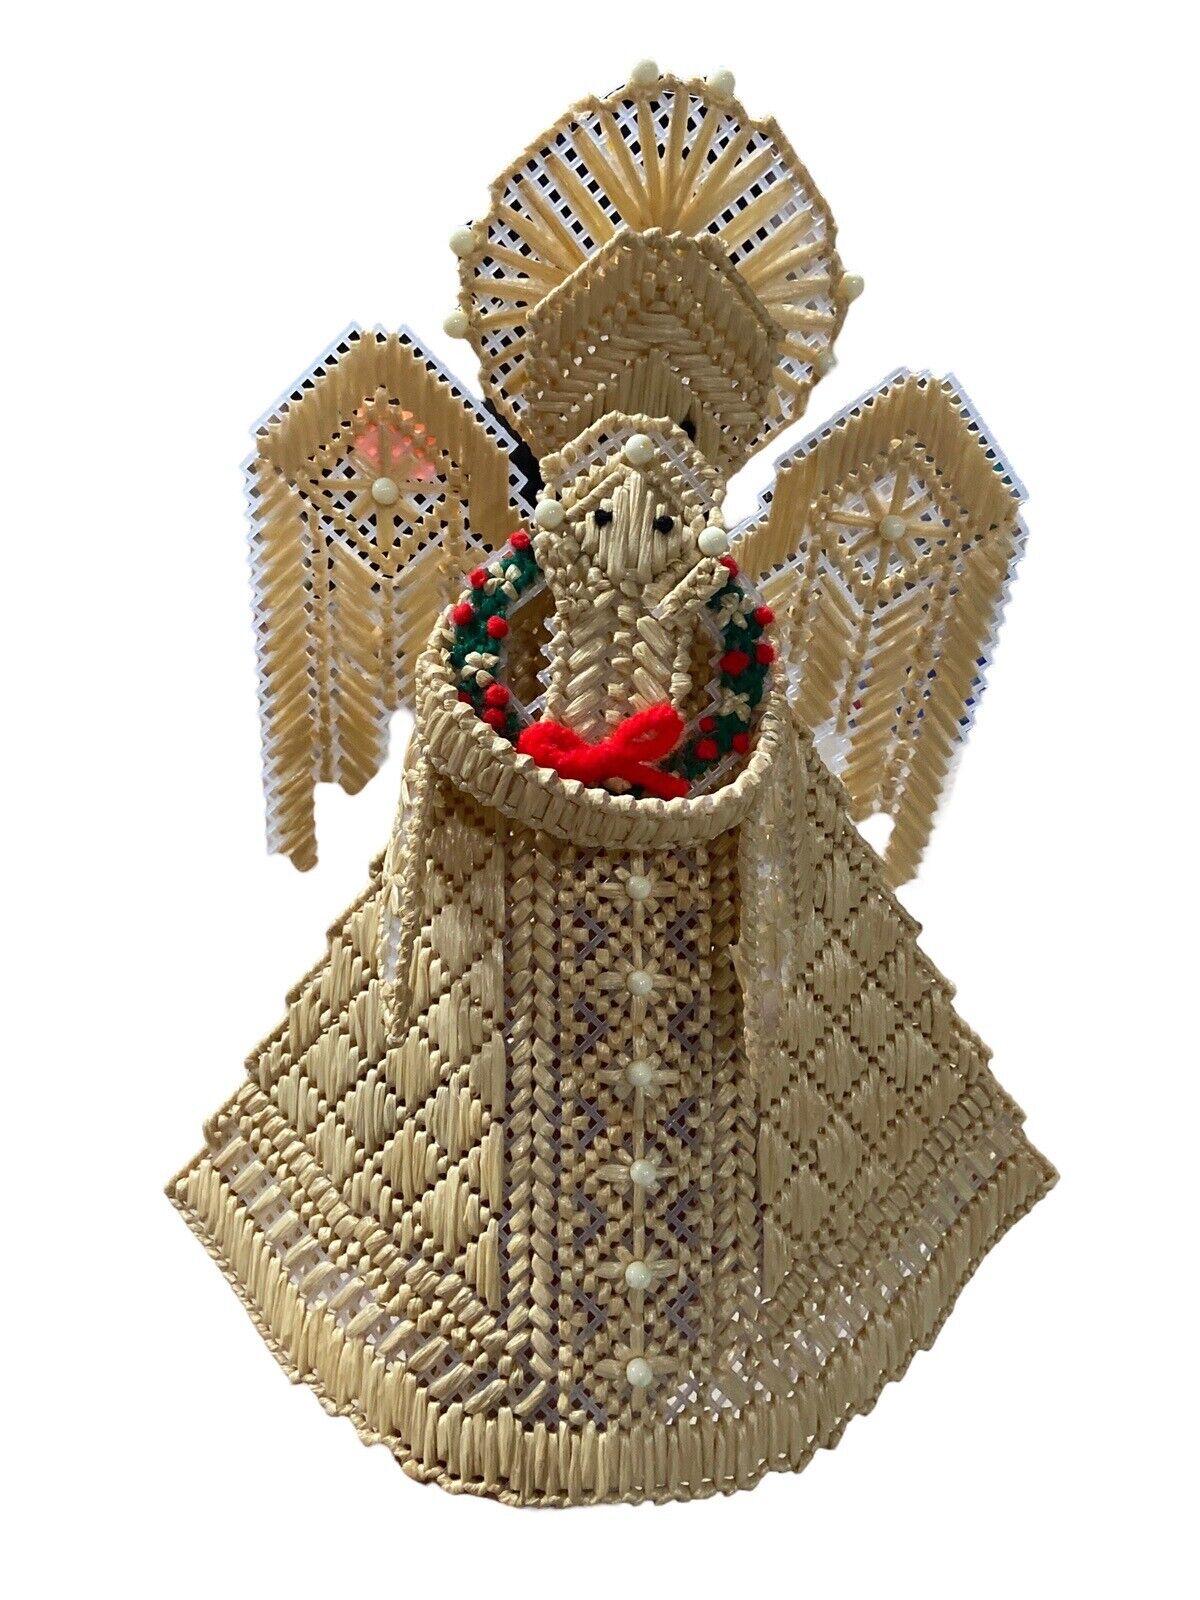 Vintage, Handmade Rattan/ Straw Tree Topper Doll, Angel With Child Jesus 12.5”